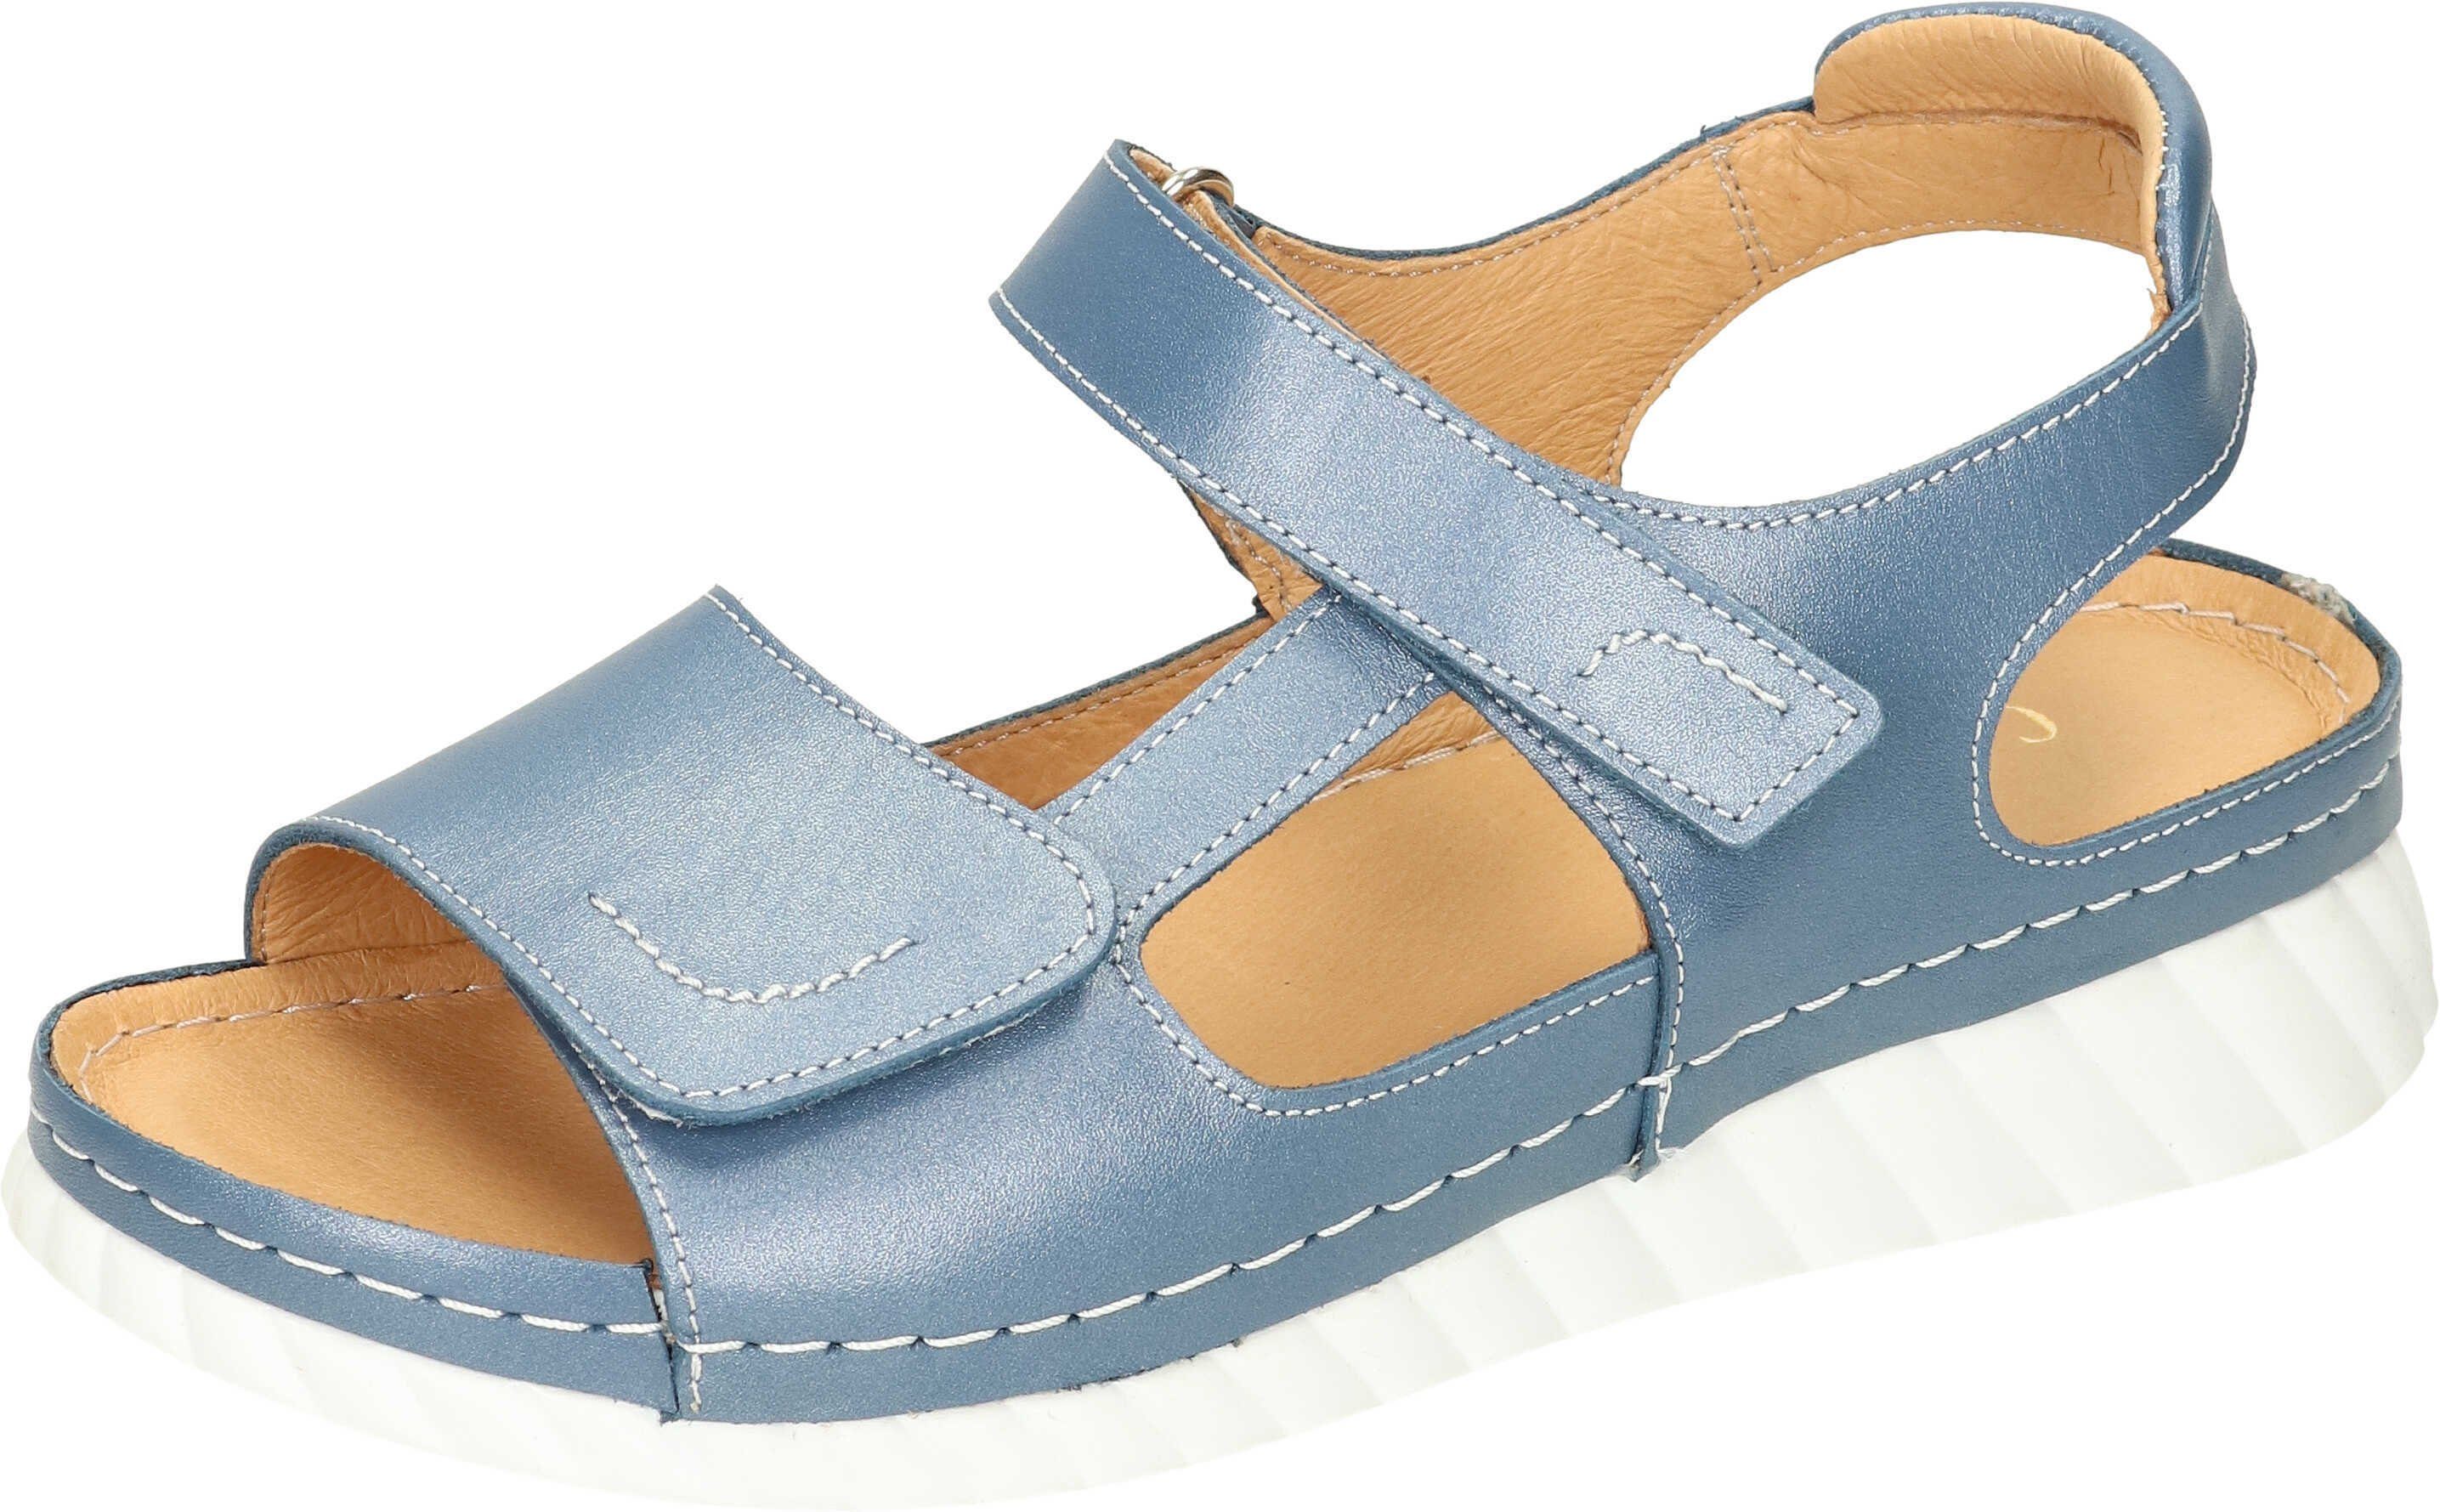 Comfortabel Sandaletten Sandalette aus echtem Leder blau